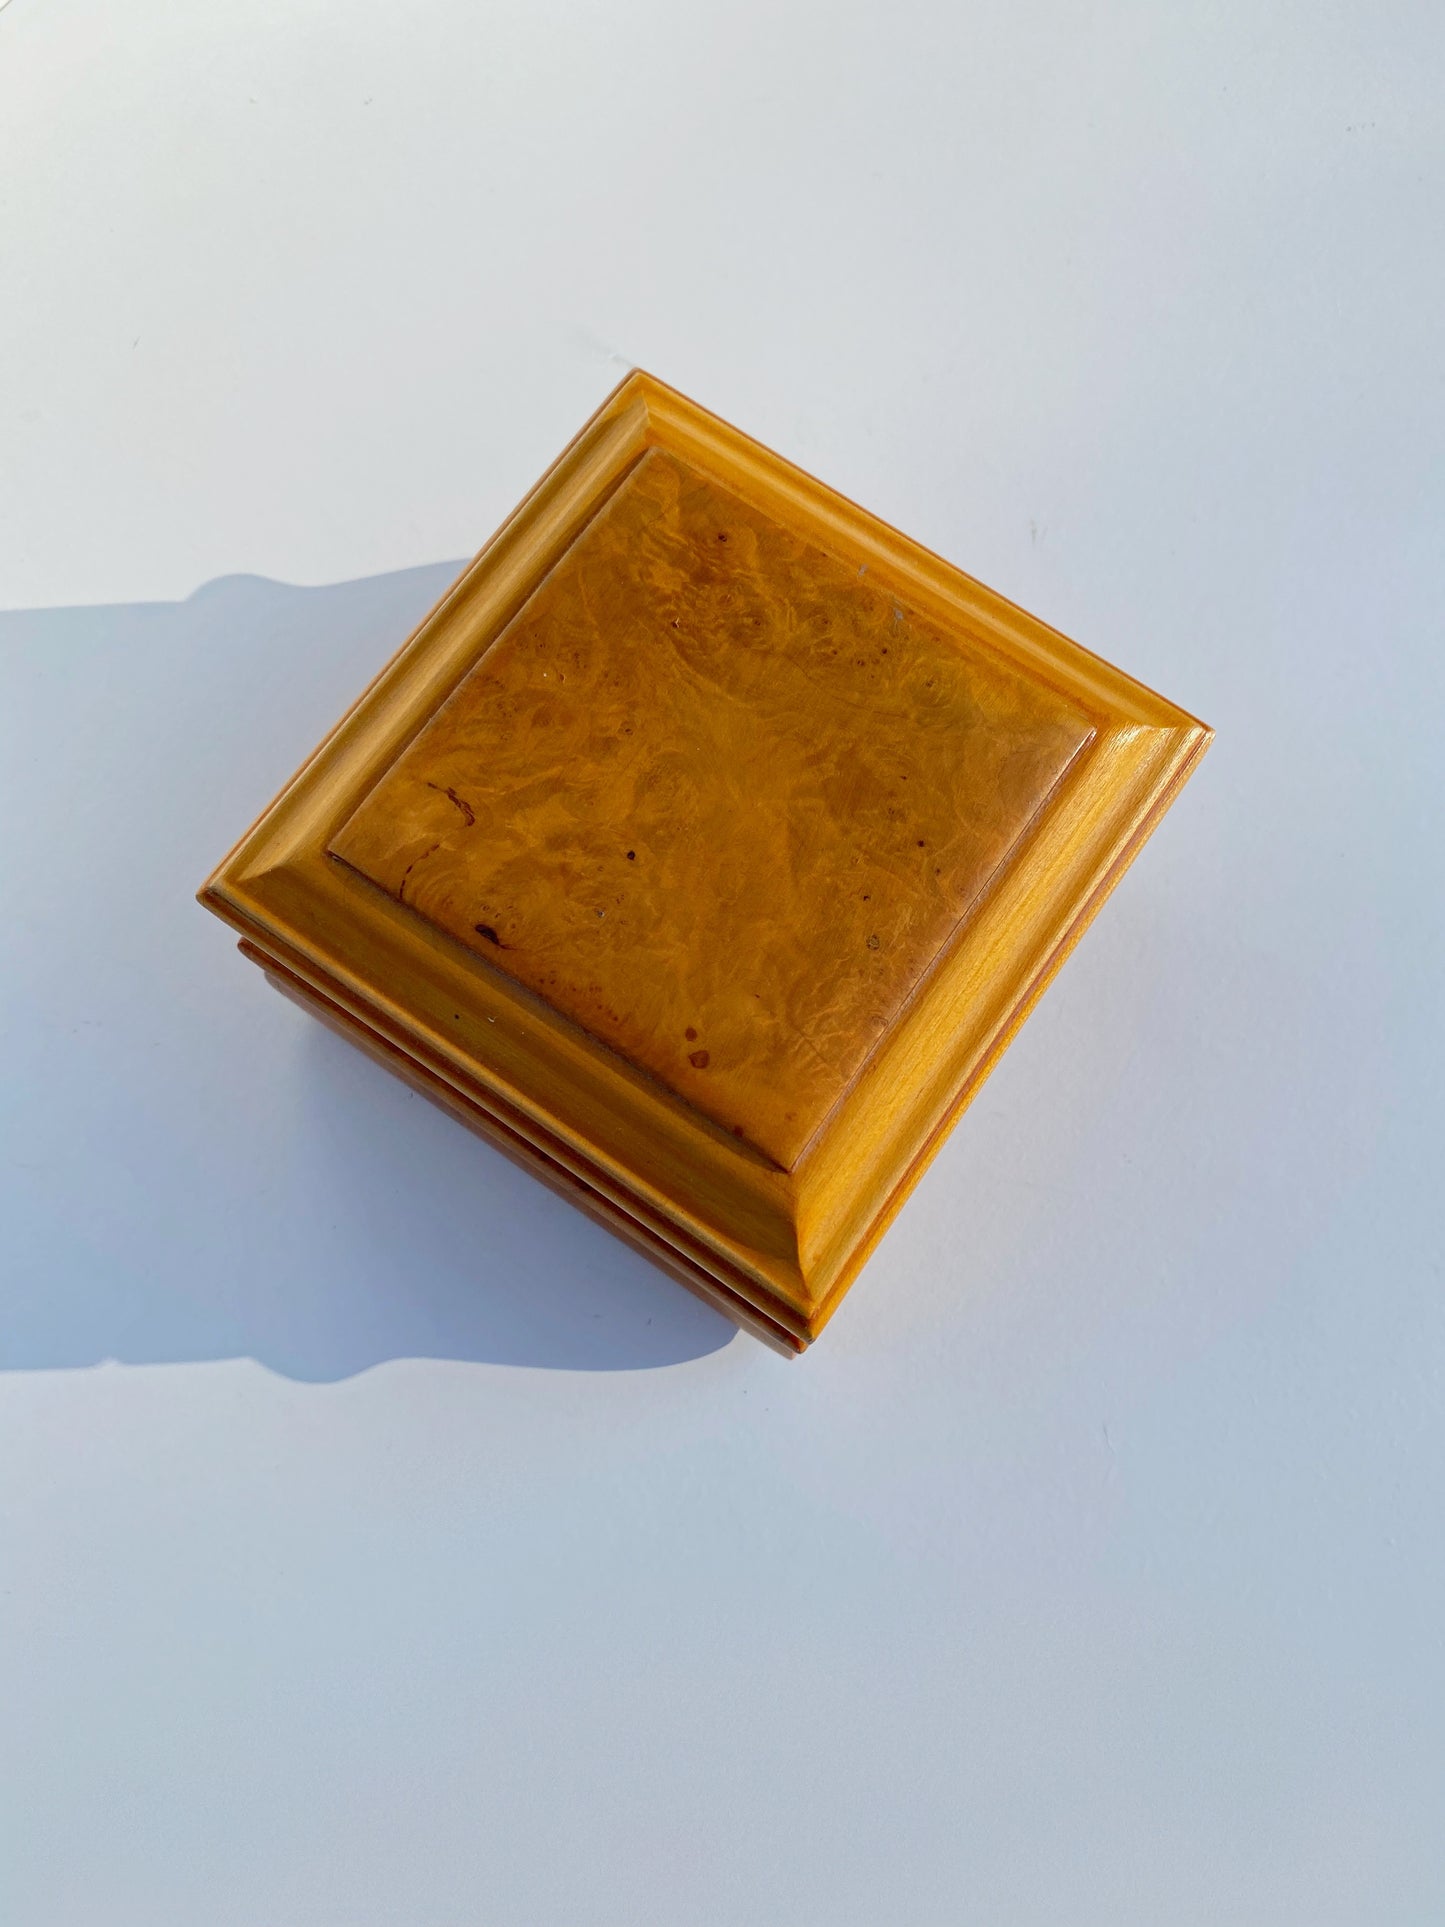 Vintage Wood Box with Flip Lid